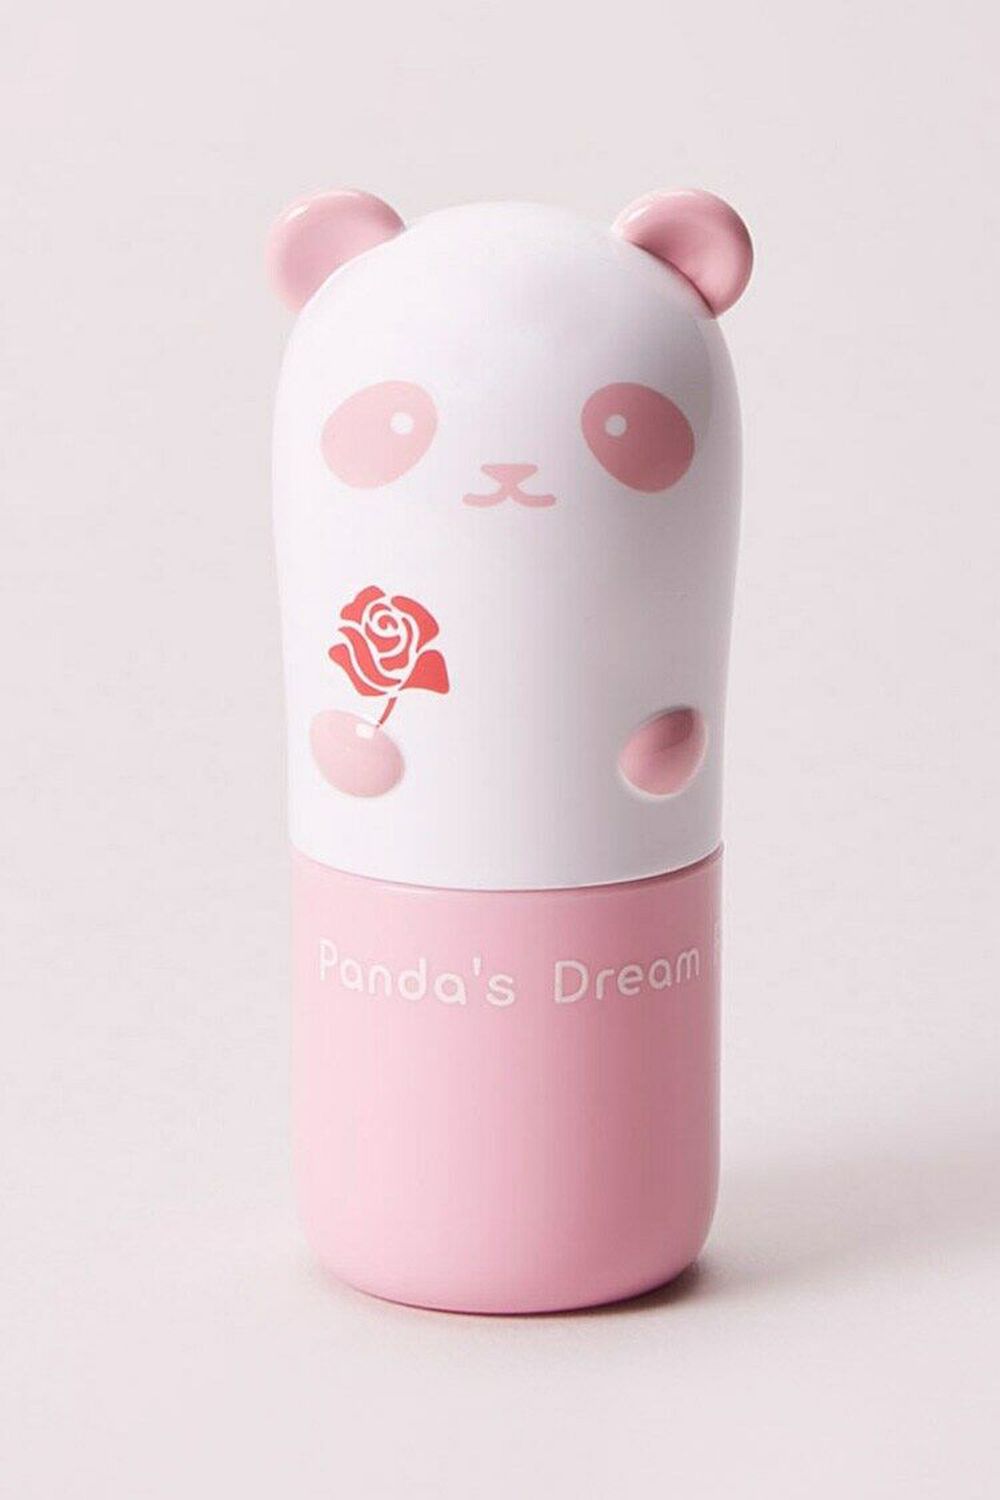 Panda's Dream Rose Oil Moisture Stick, image 1